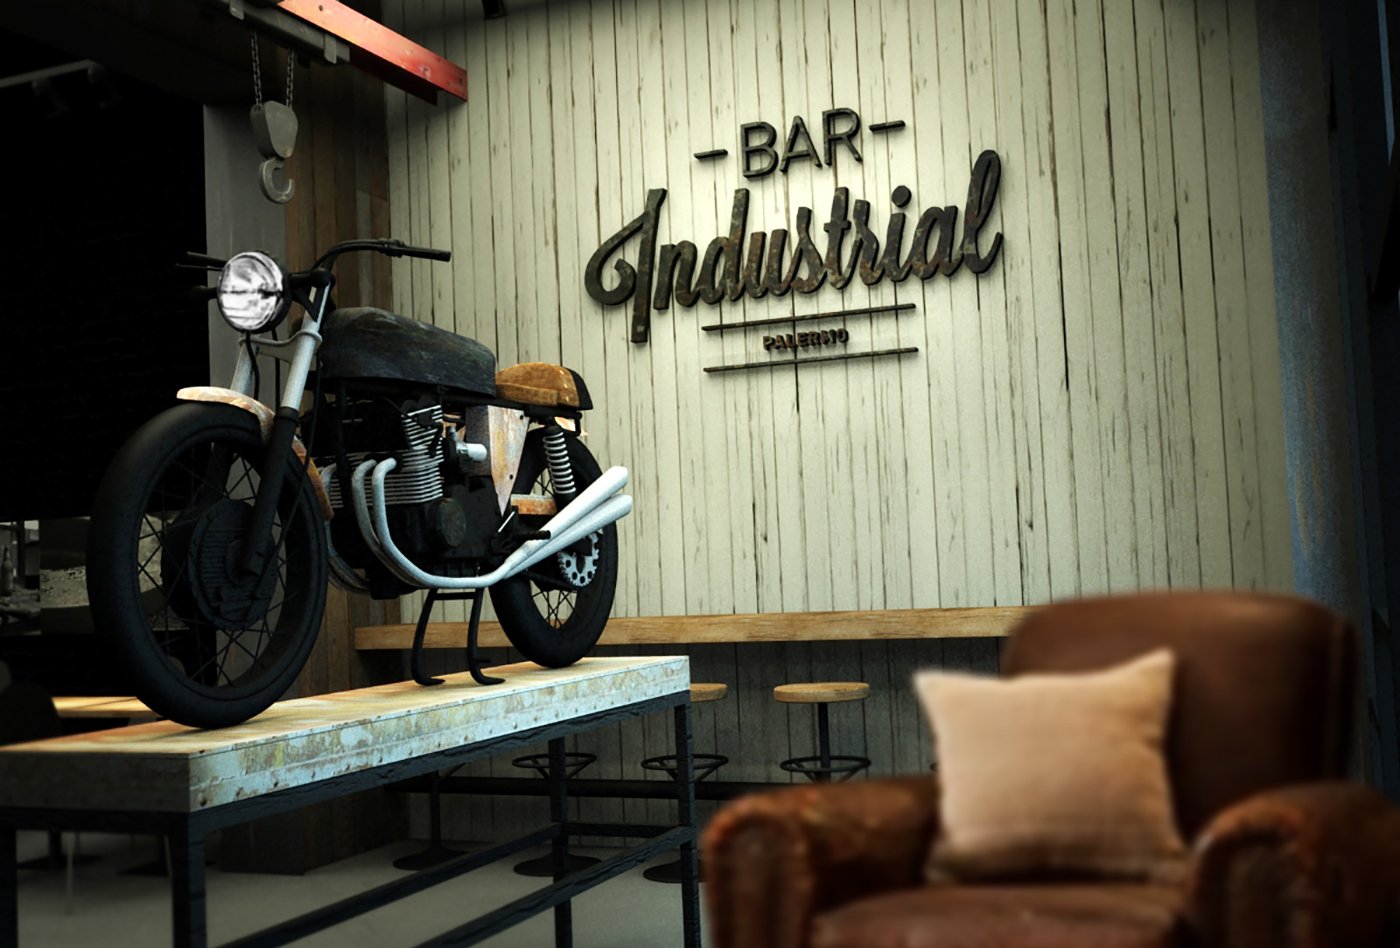 logos logo identity bar garage Motos cafe racer industrial leather motorcycle